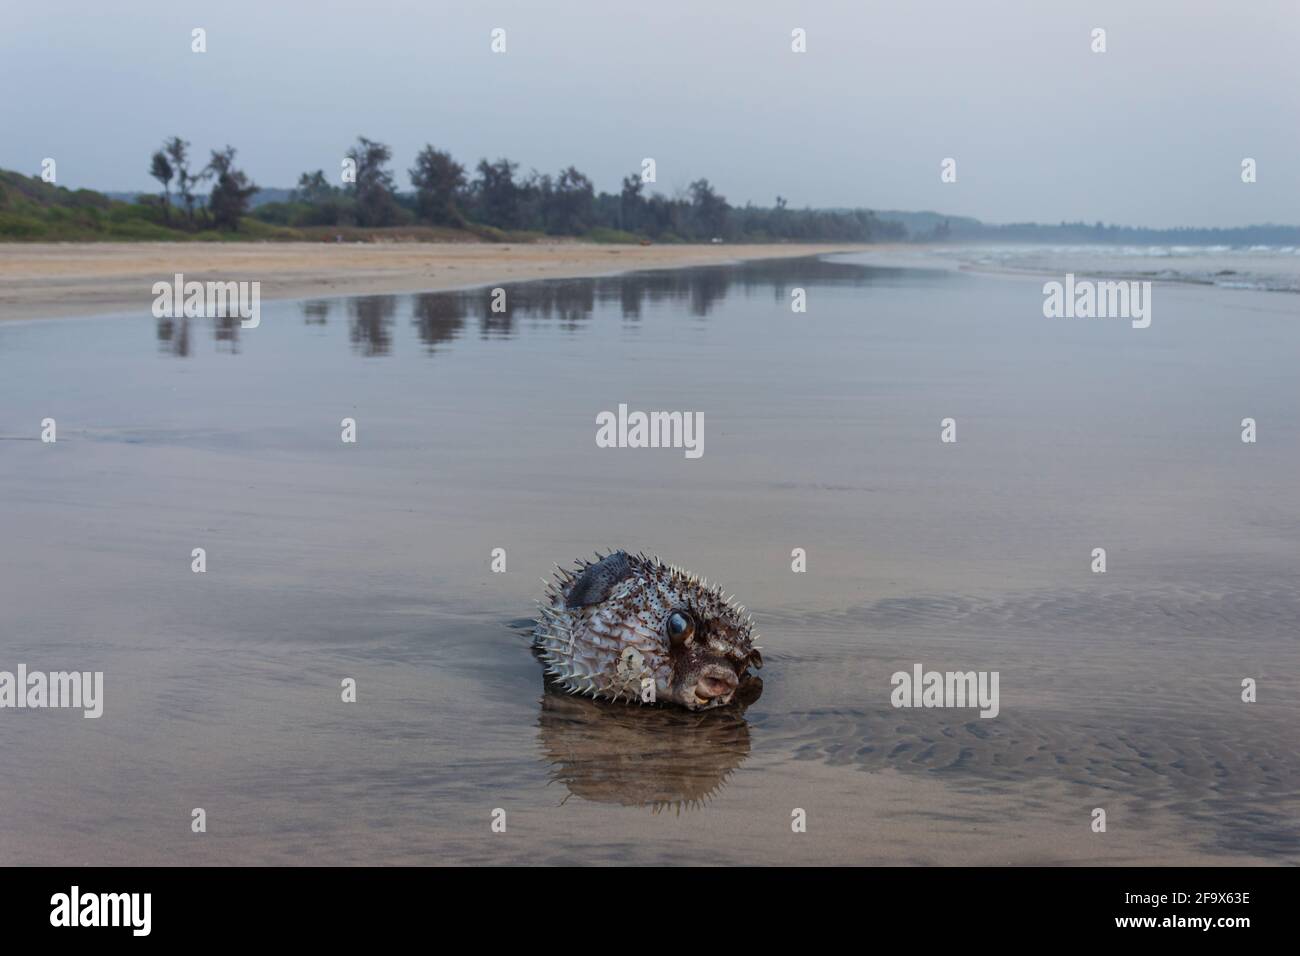 Puffer fish or blowfish on Kachare beach, Ratnagiri, Maharashtra, India. Stock Photo